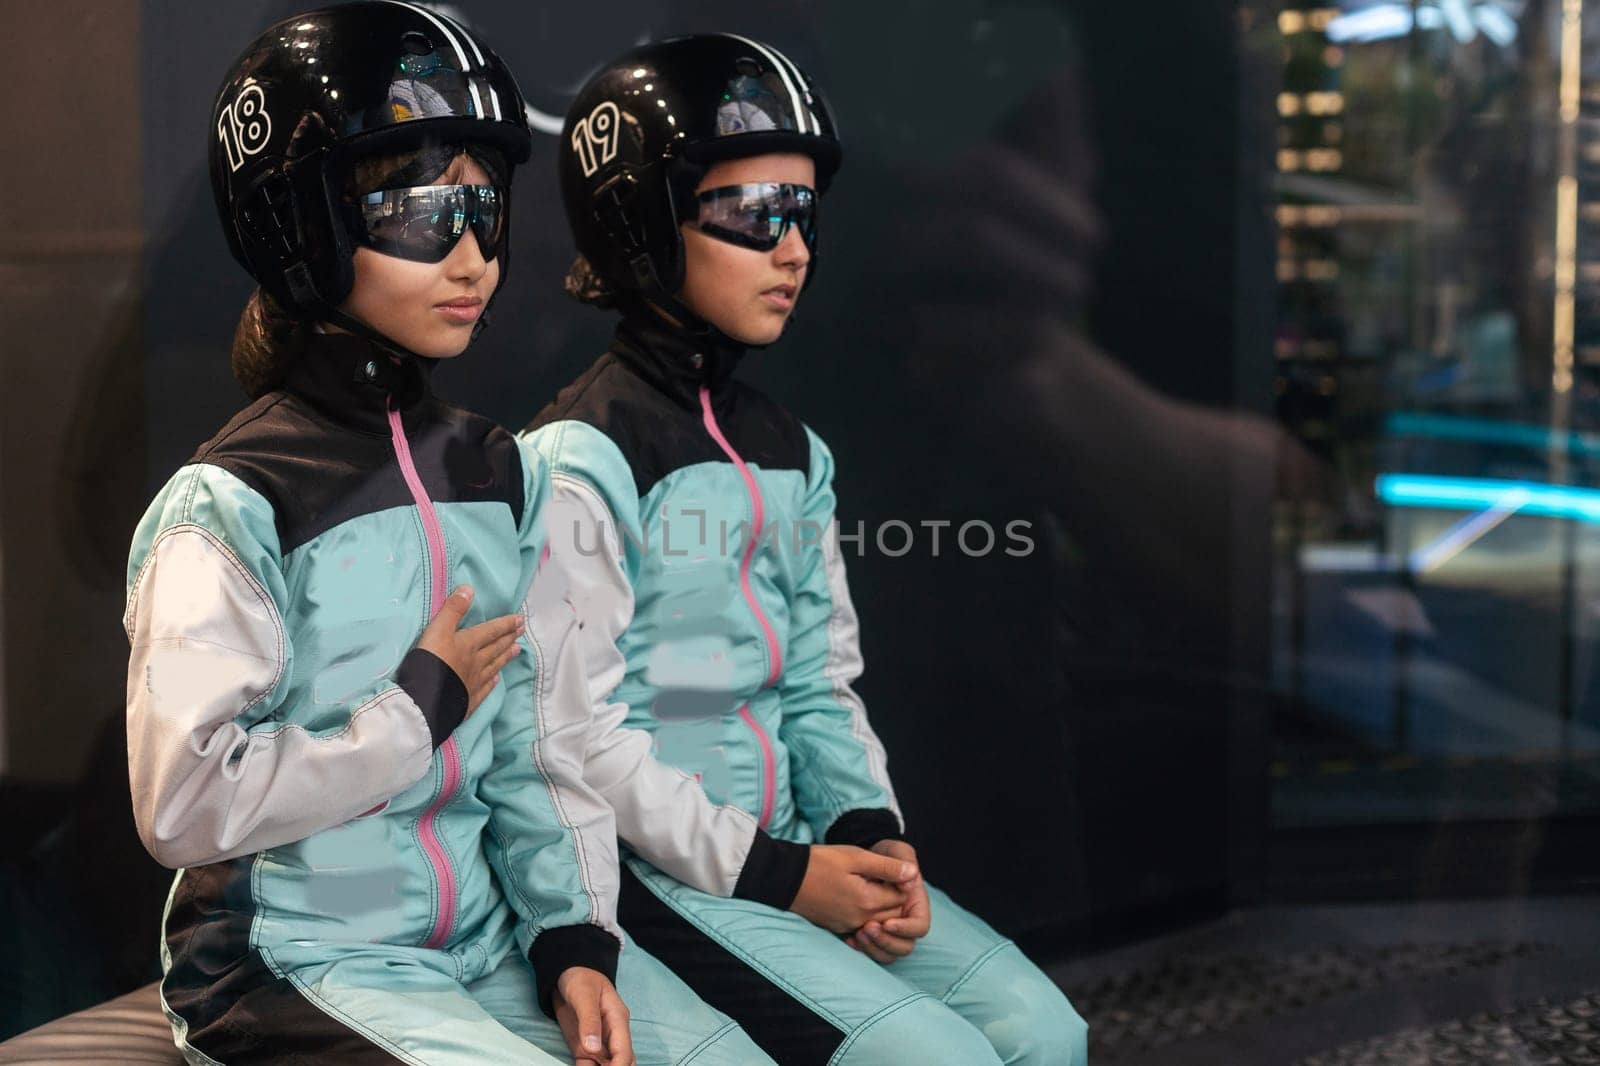 children in astronaut costumes, girls by Andelov13